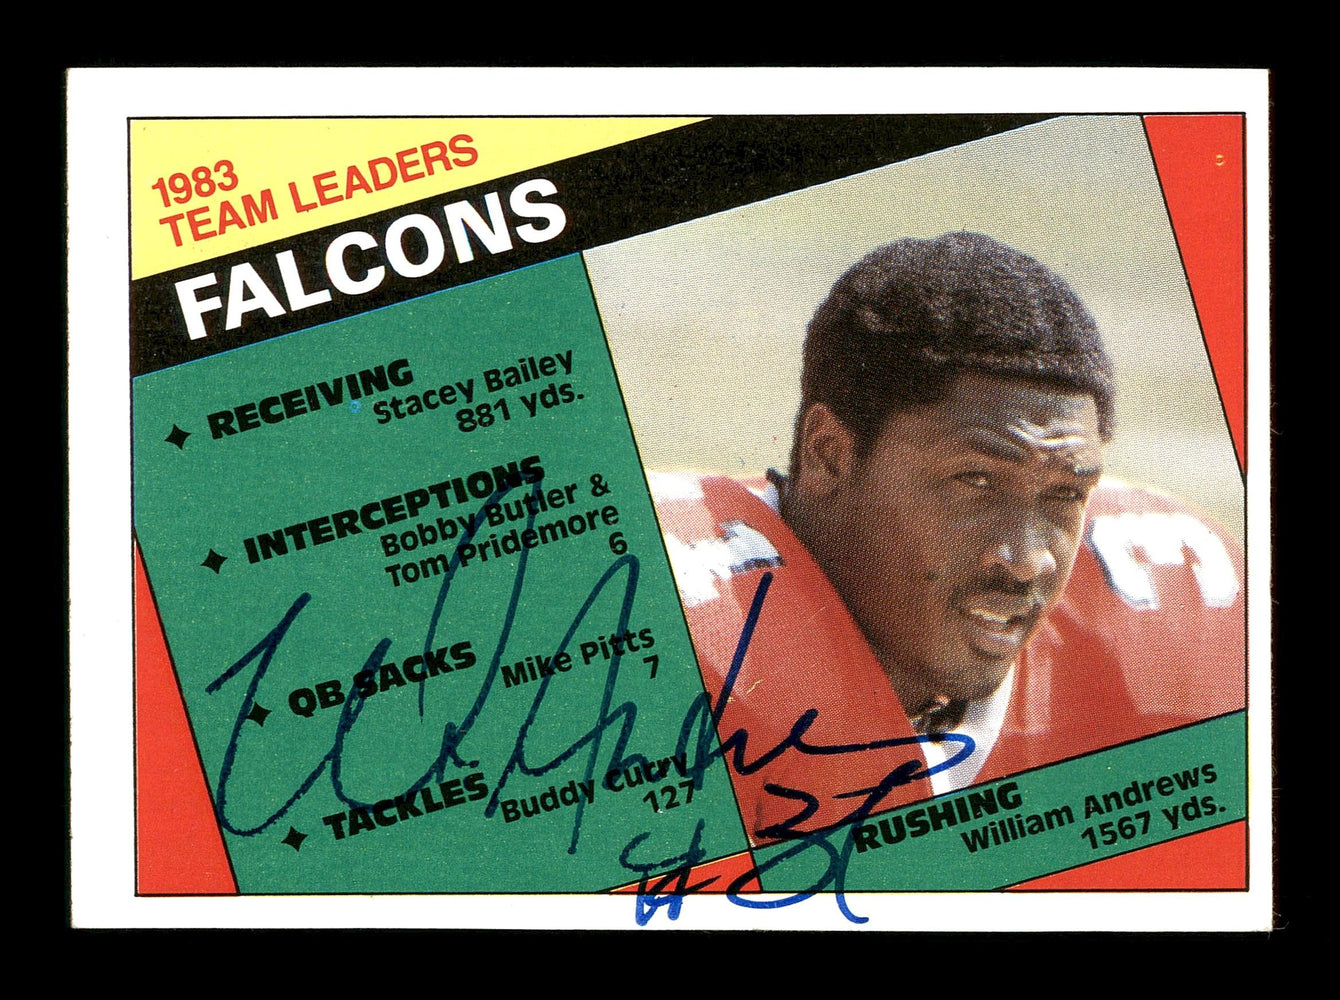 William Andrews Autographed 1984 Topps Card #208 Atlanta Falcons SKU #176170 - RSA